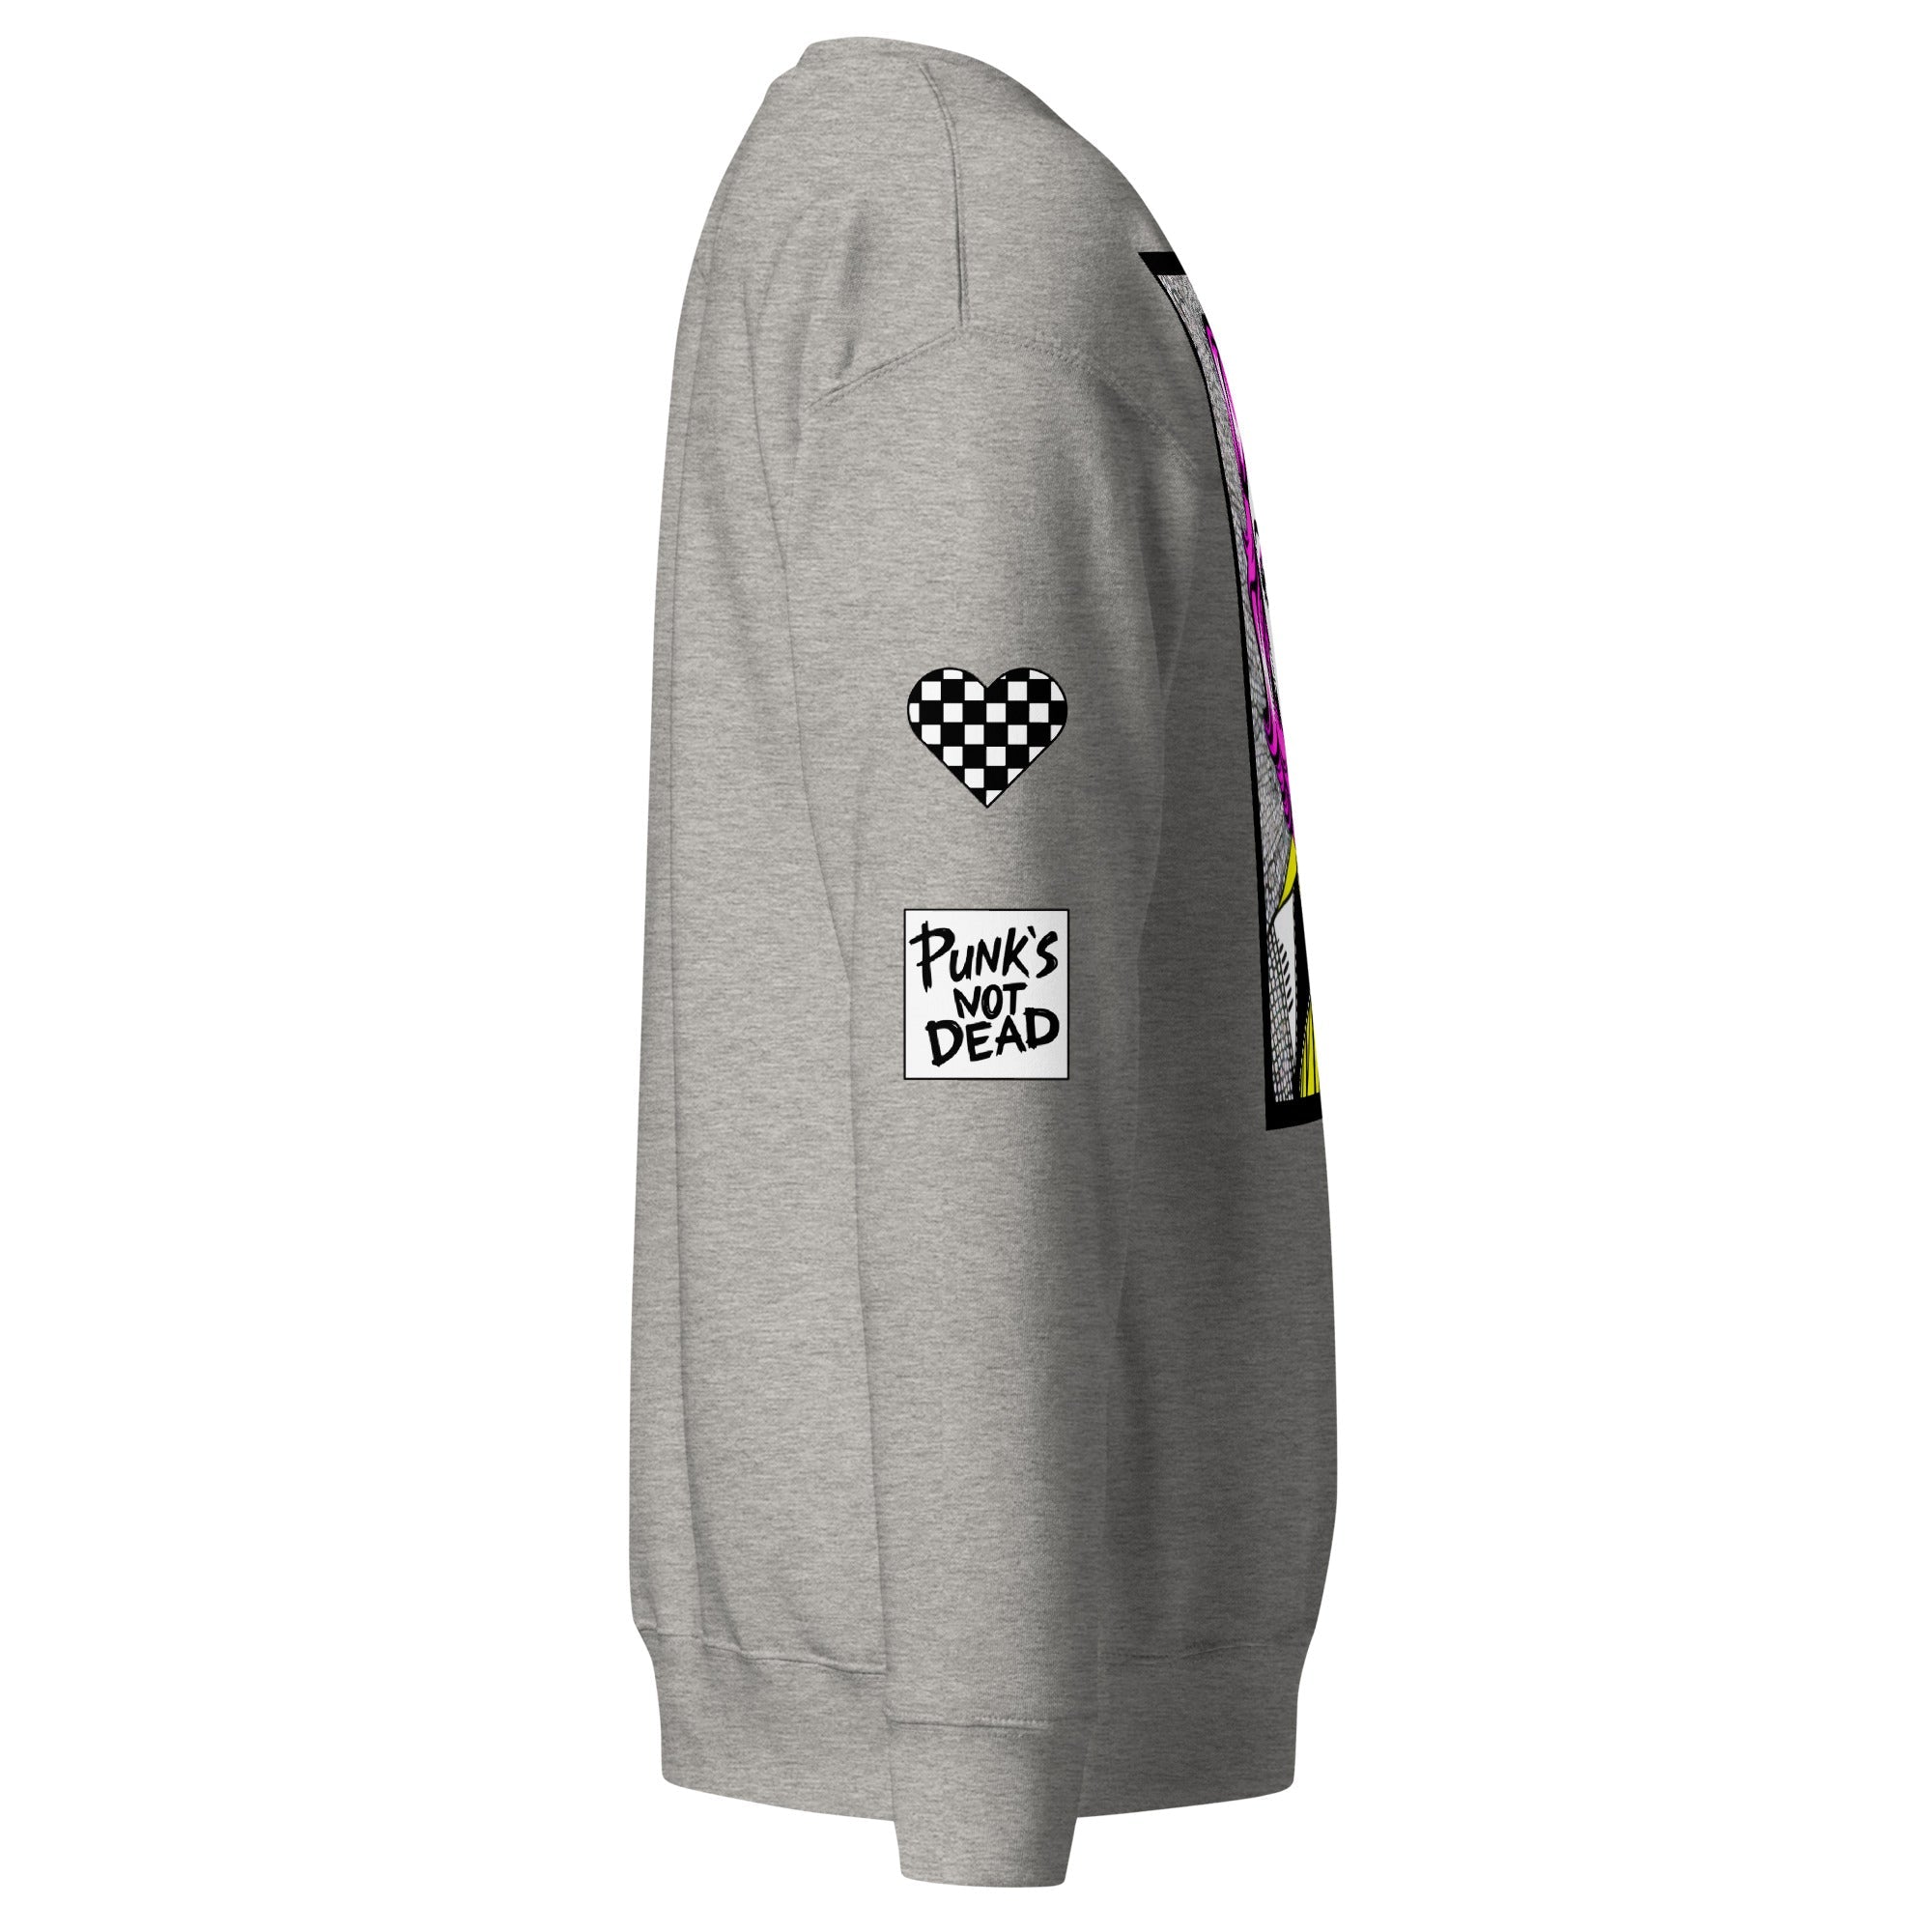 Unisex Premium Sweatshirt - Punk Pop Art Scene 8 - GRAPHIC T-SHIRTS